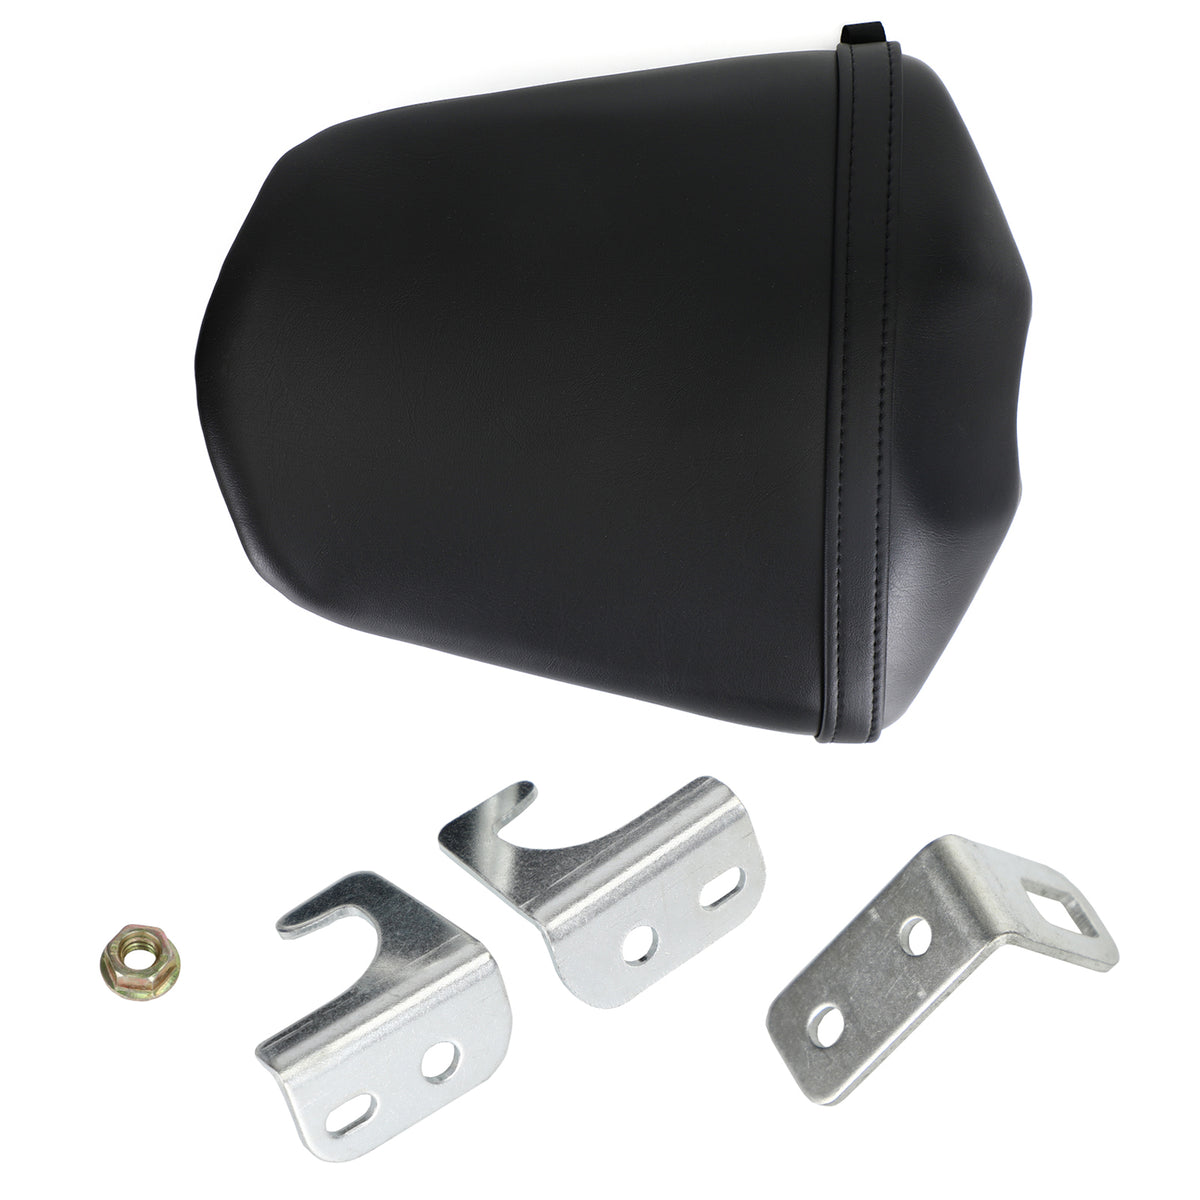 Rear Passenger Seat Black Cushion Fit For Yamaha Fz-1 Fz1 06-10 3C3-24750-02-00 Generic